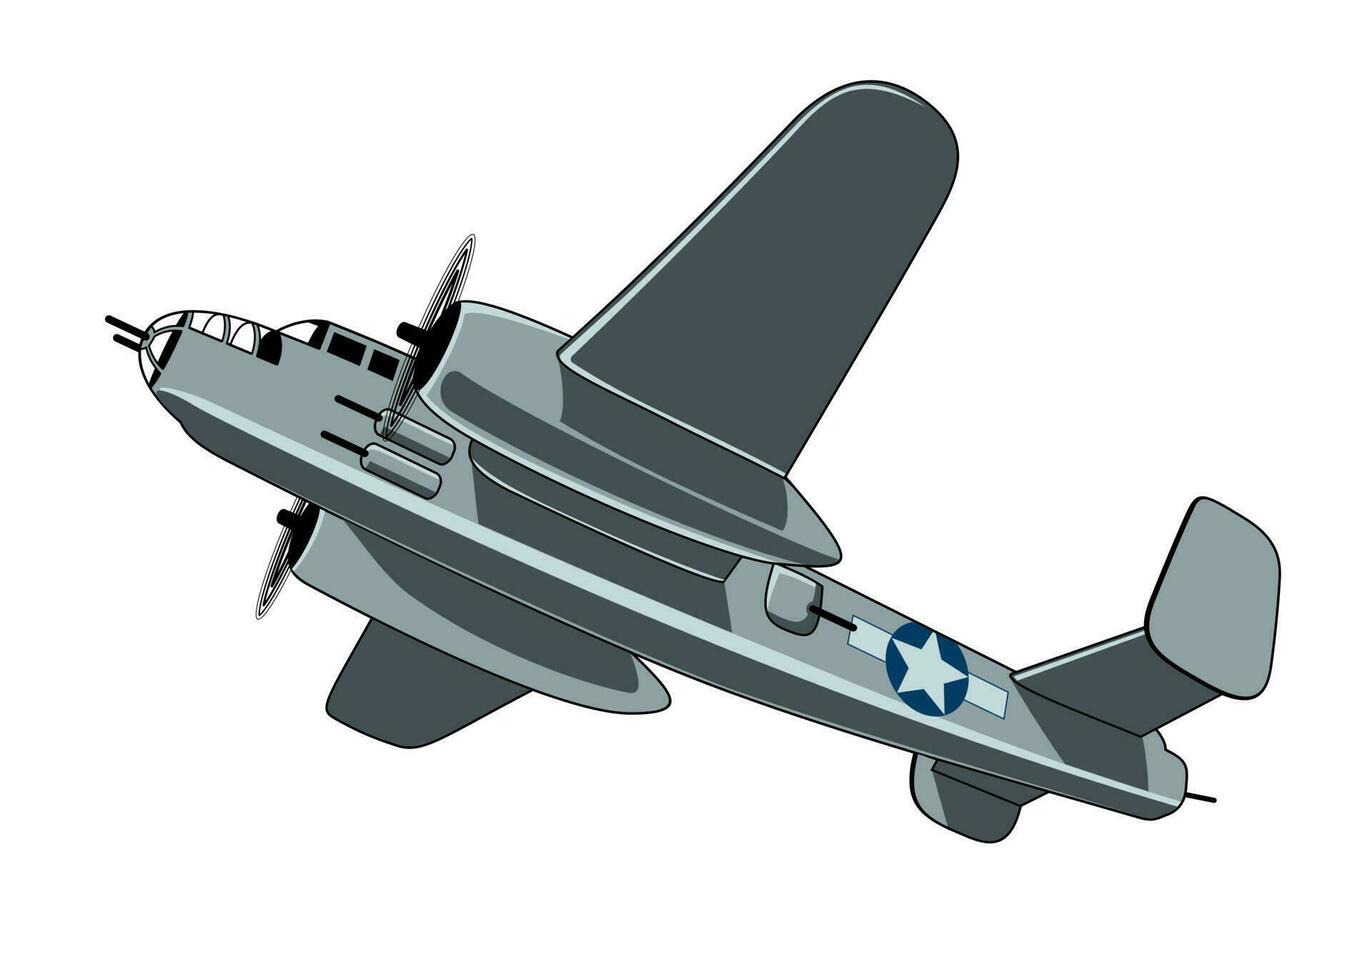 bombardeiro b-25 mitchell 1940. ww ii aeronaves. vintage avião. vetor clipart isolado em branco.